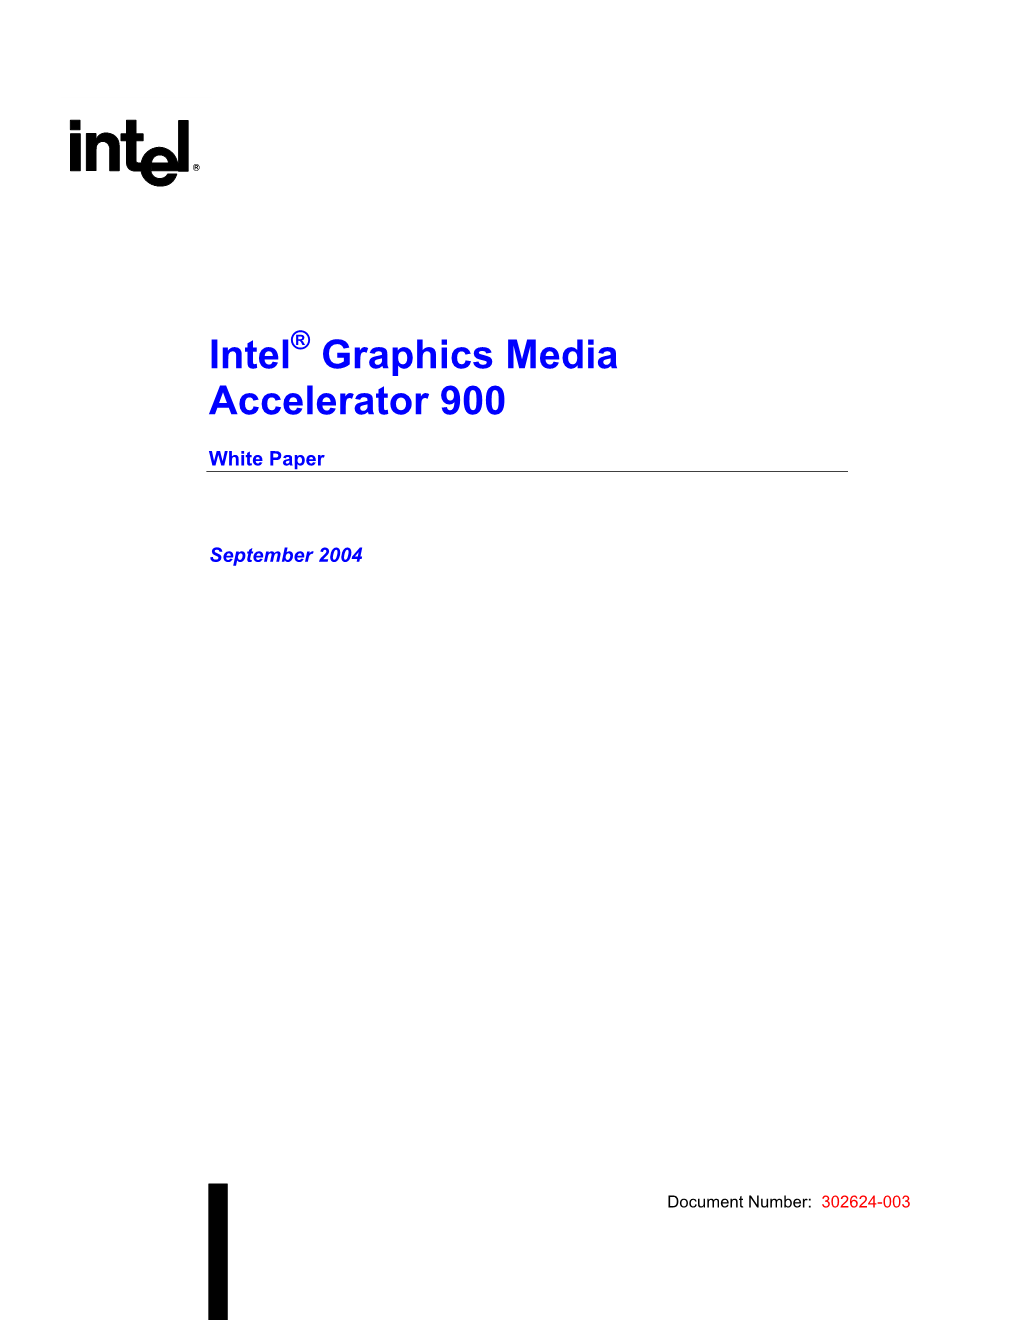 Intel ® Graphics Media Accelerator